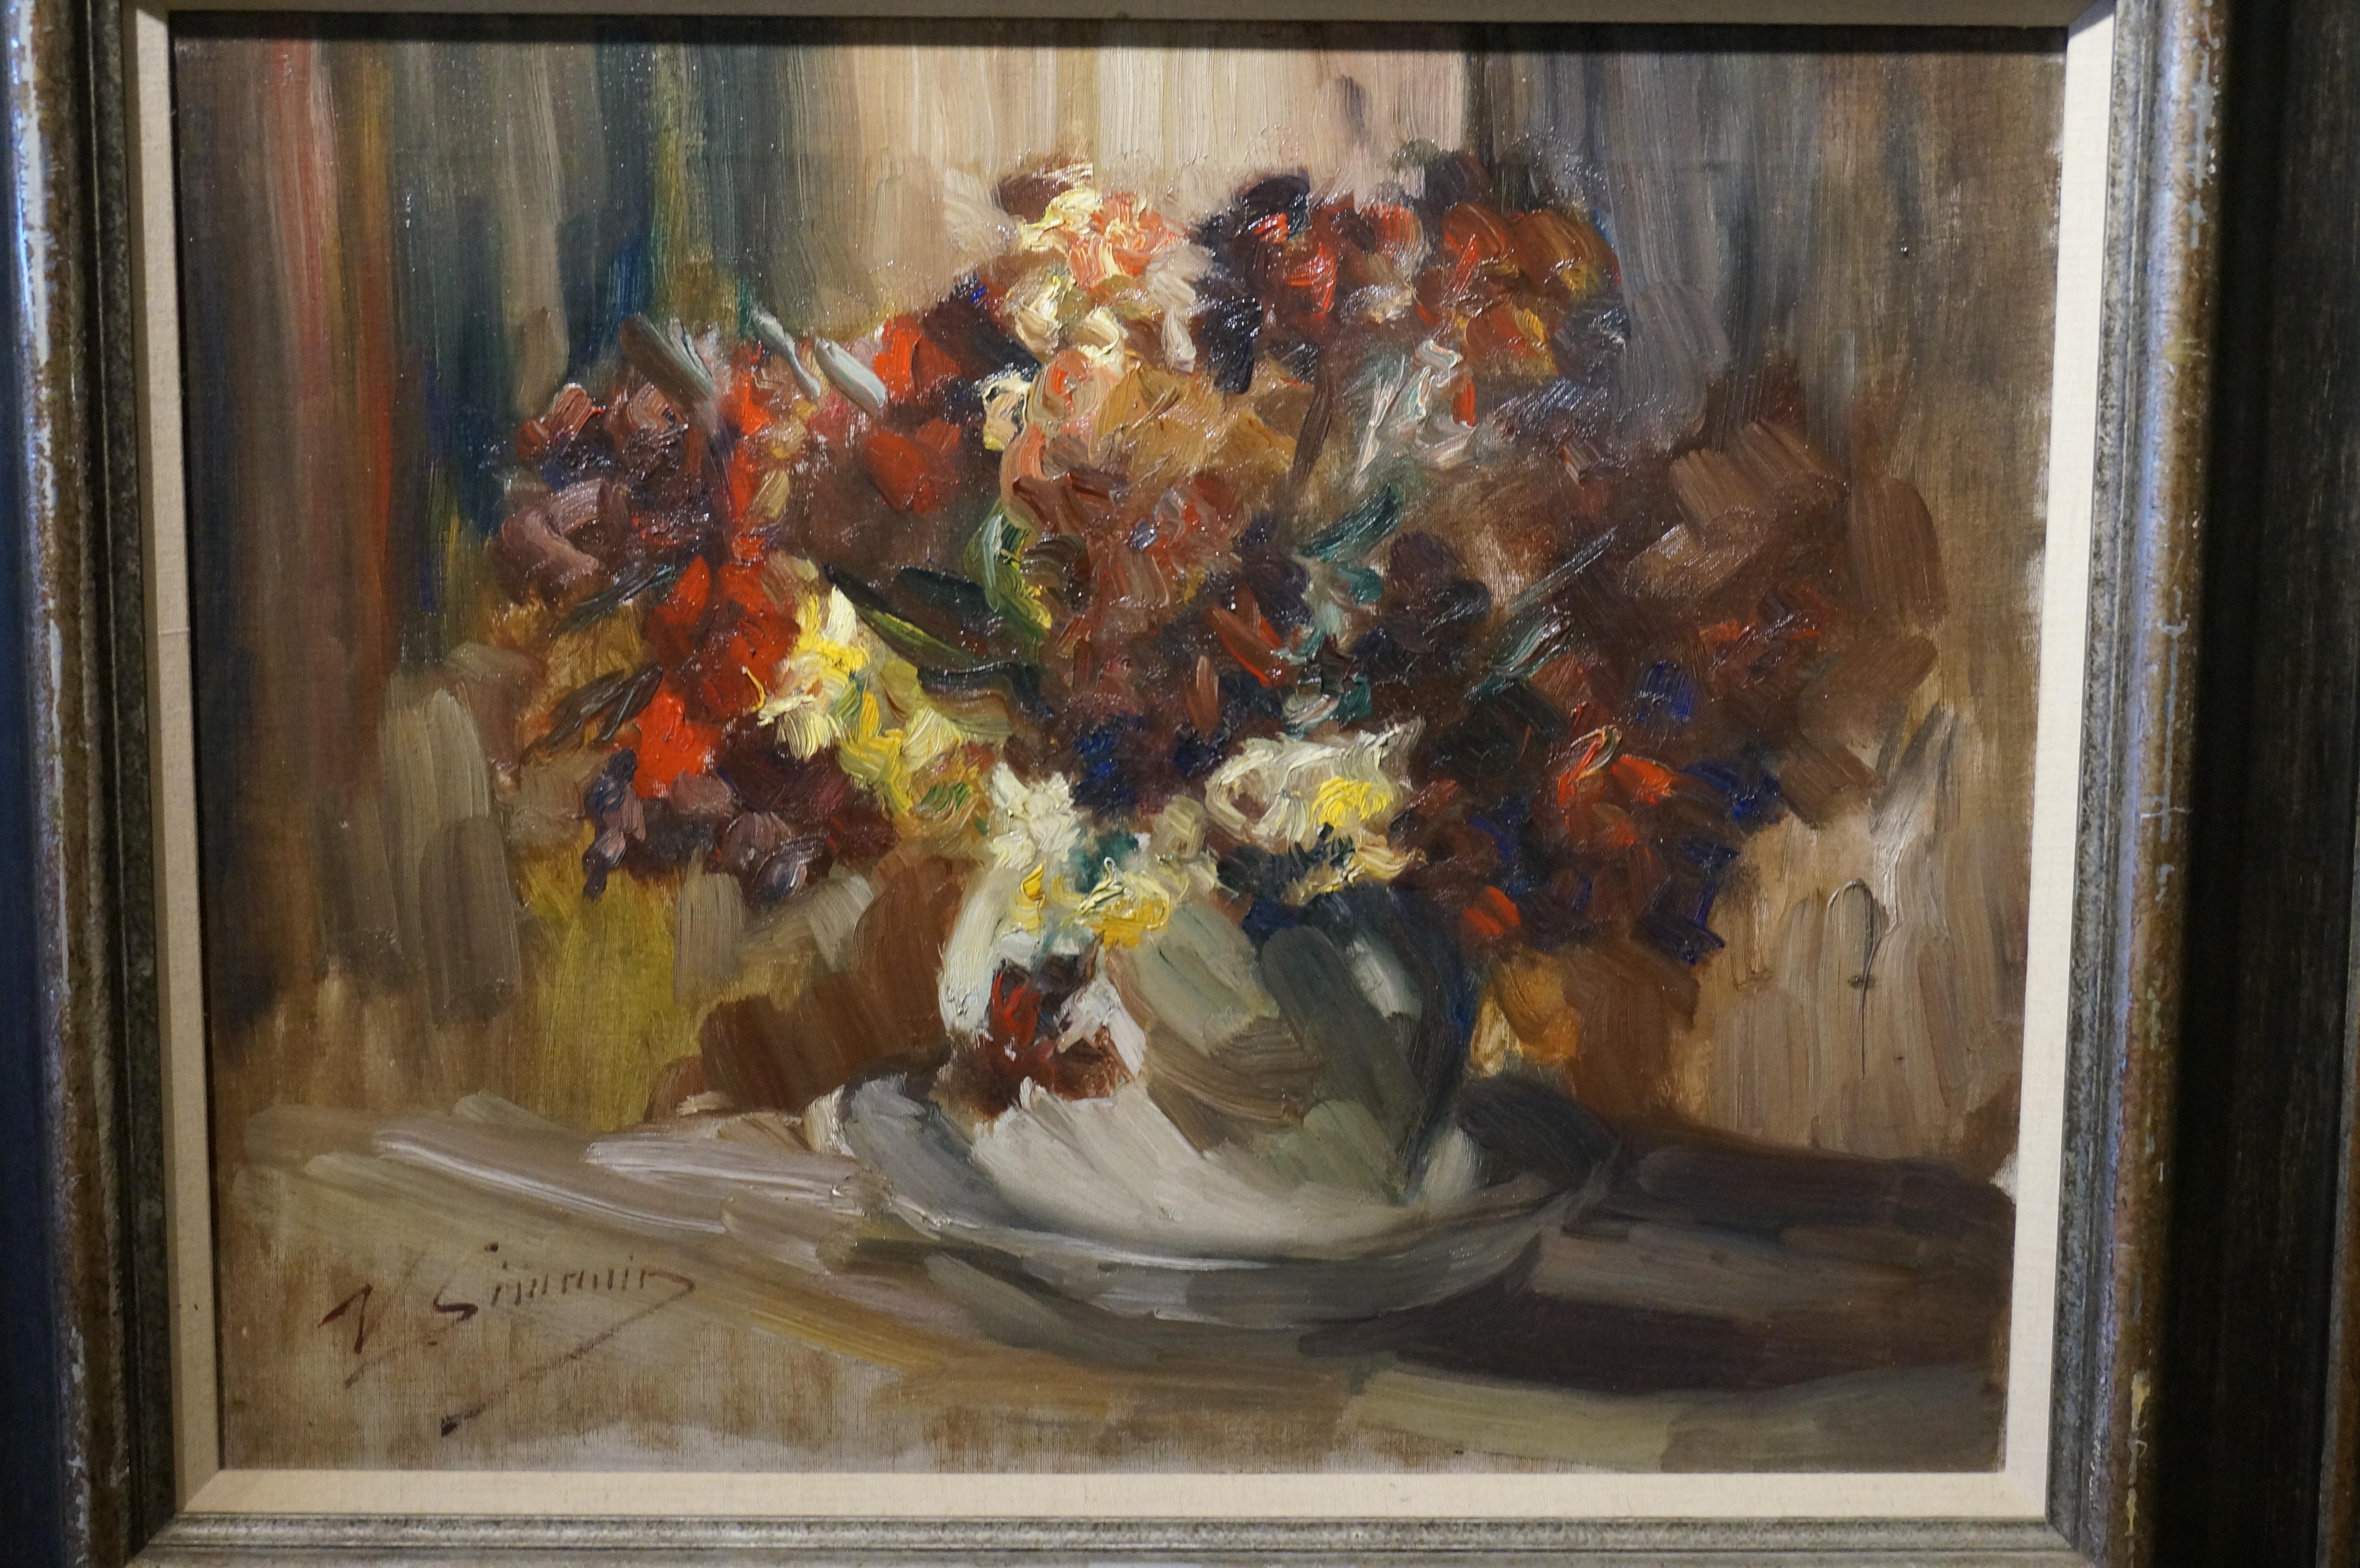 Flower stil-life painting, Vicor Simonin, impressionist, oil on canvas - Painting by Victor Simonin